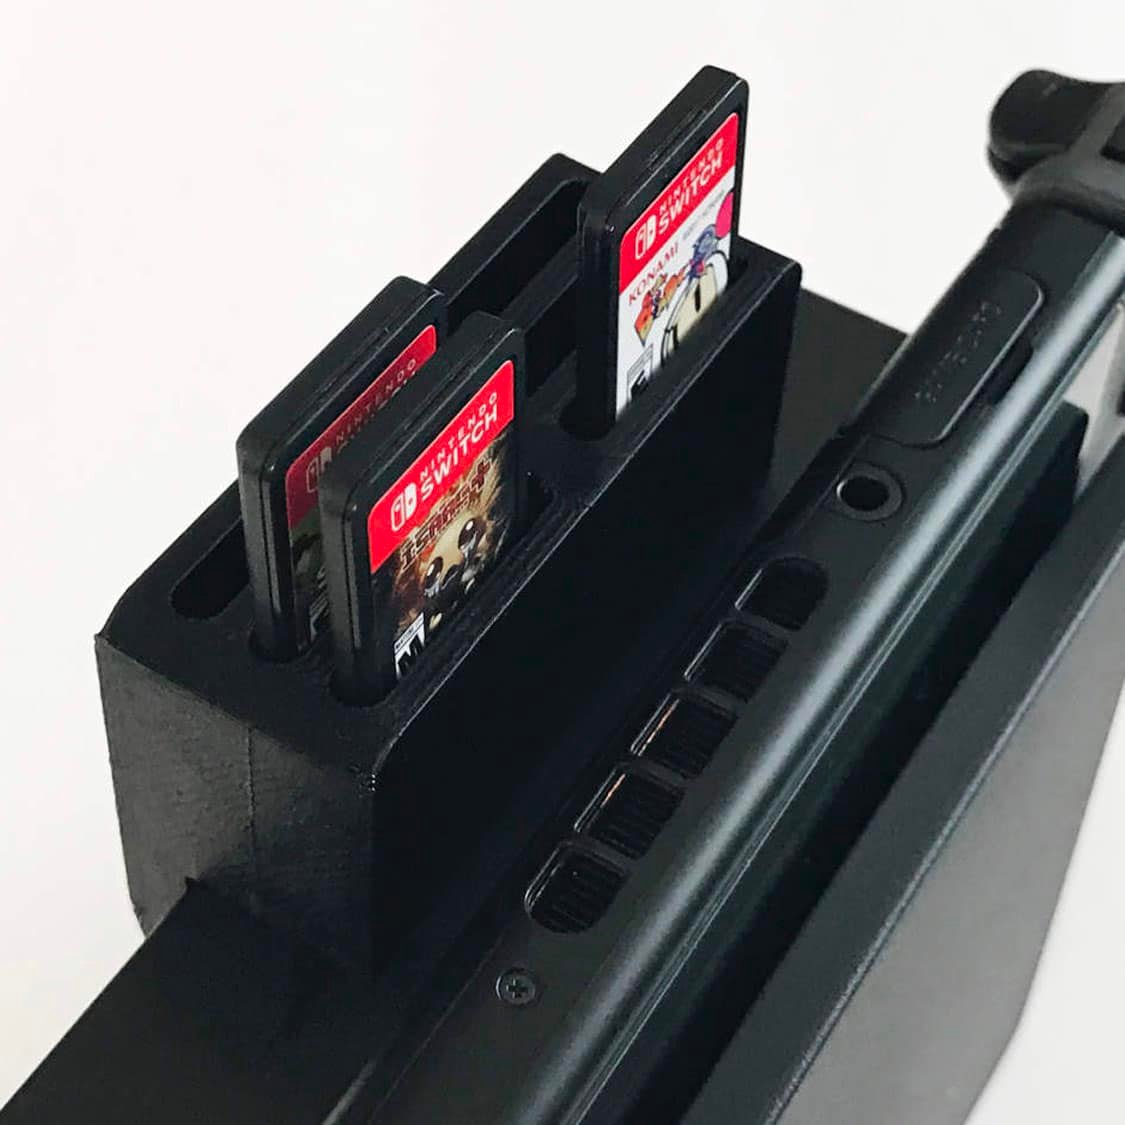 Nintendo Switch Cartridge Holder